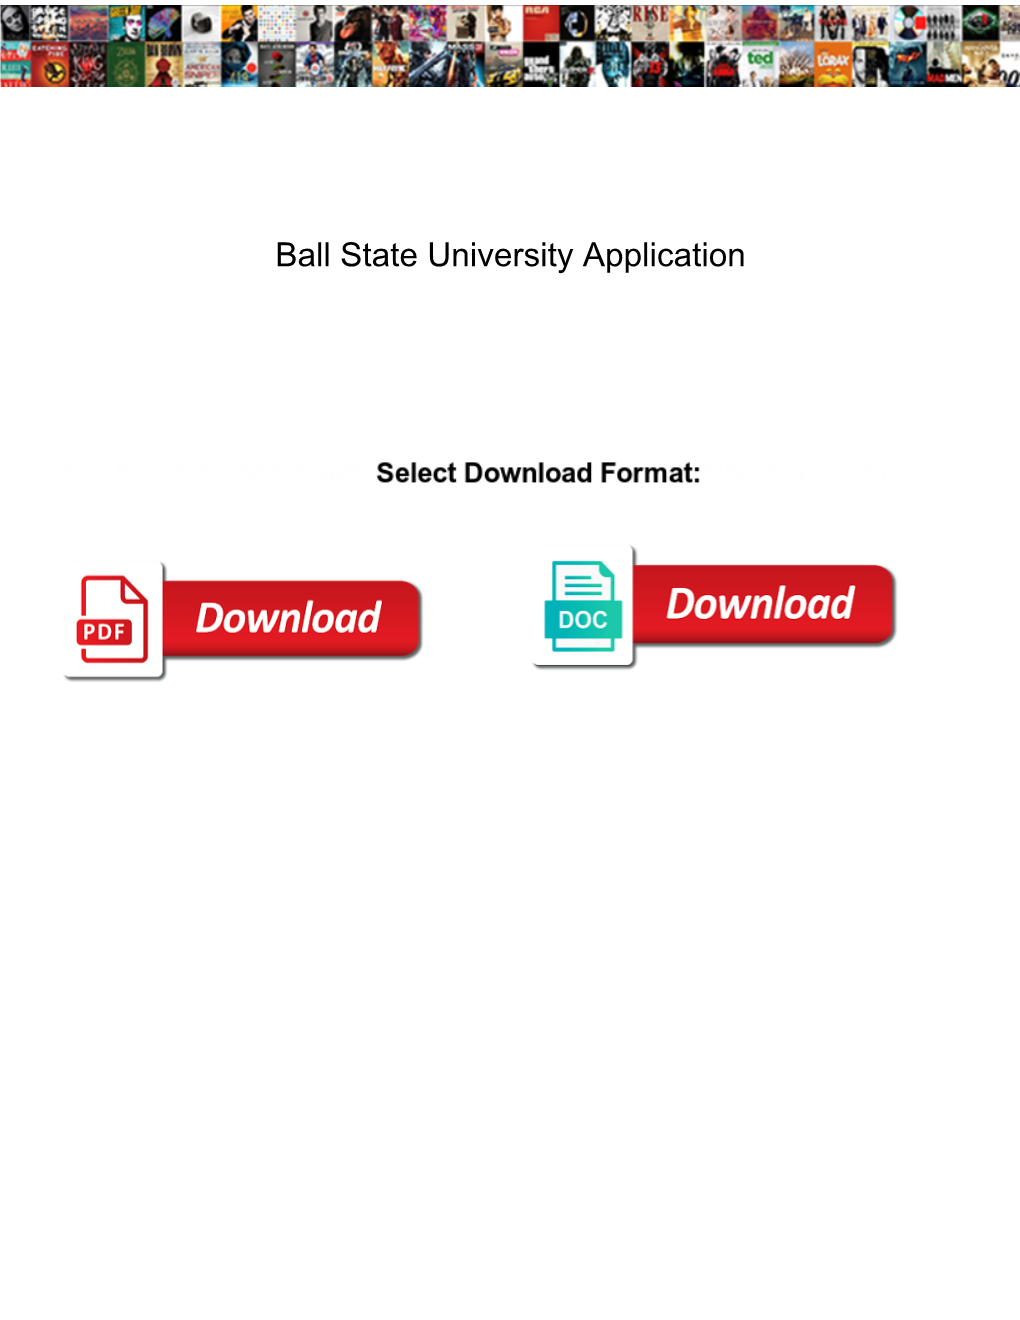 Ball State University Application Cheating